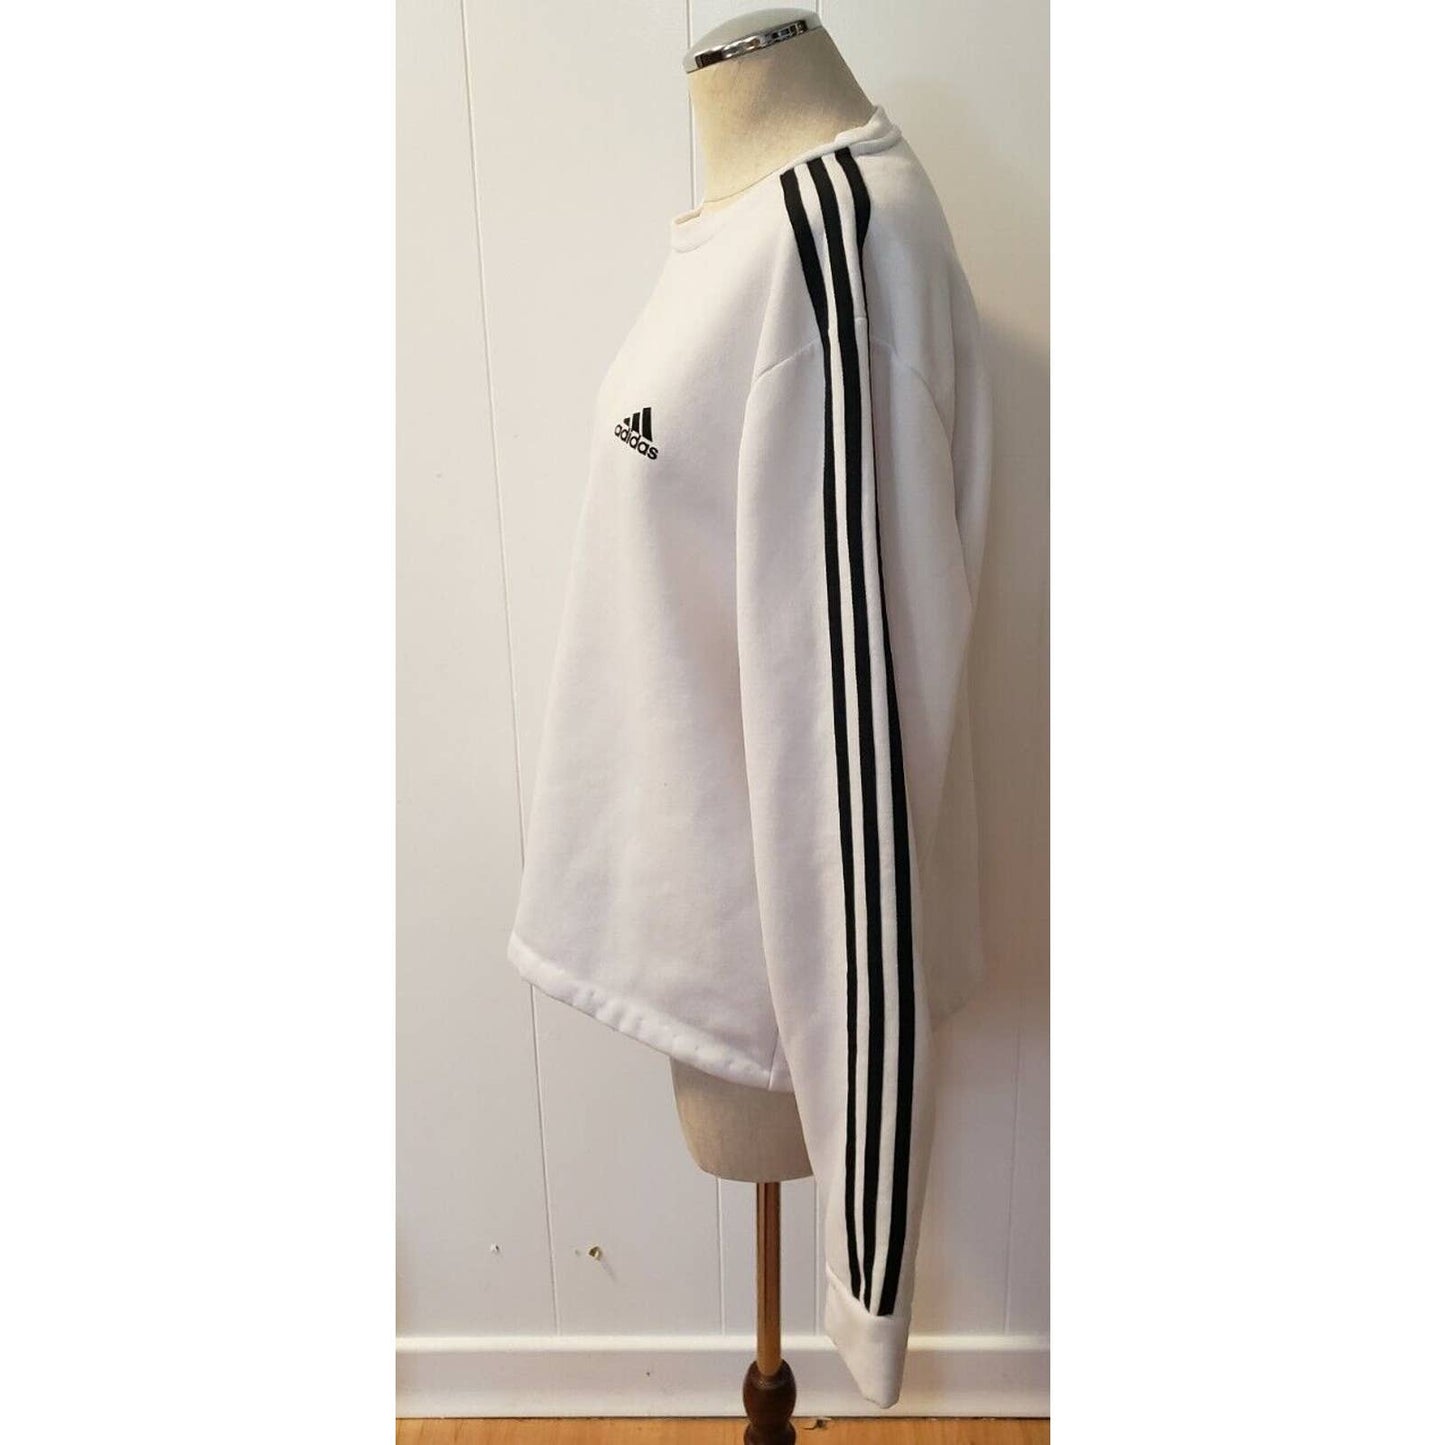 Adidas sweatshirt 3 striped streetwear Size Large (40)